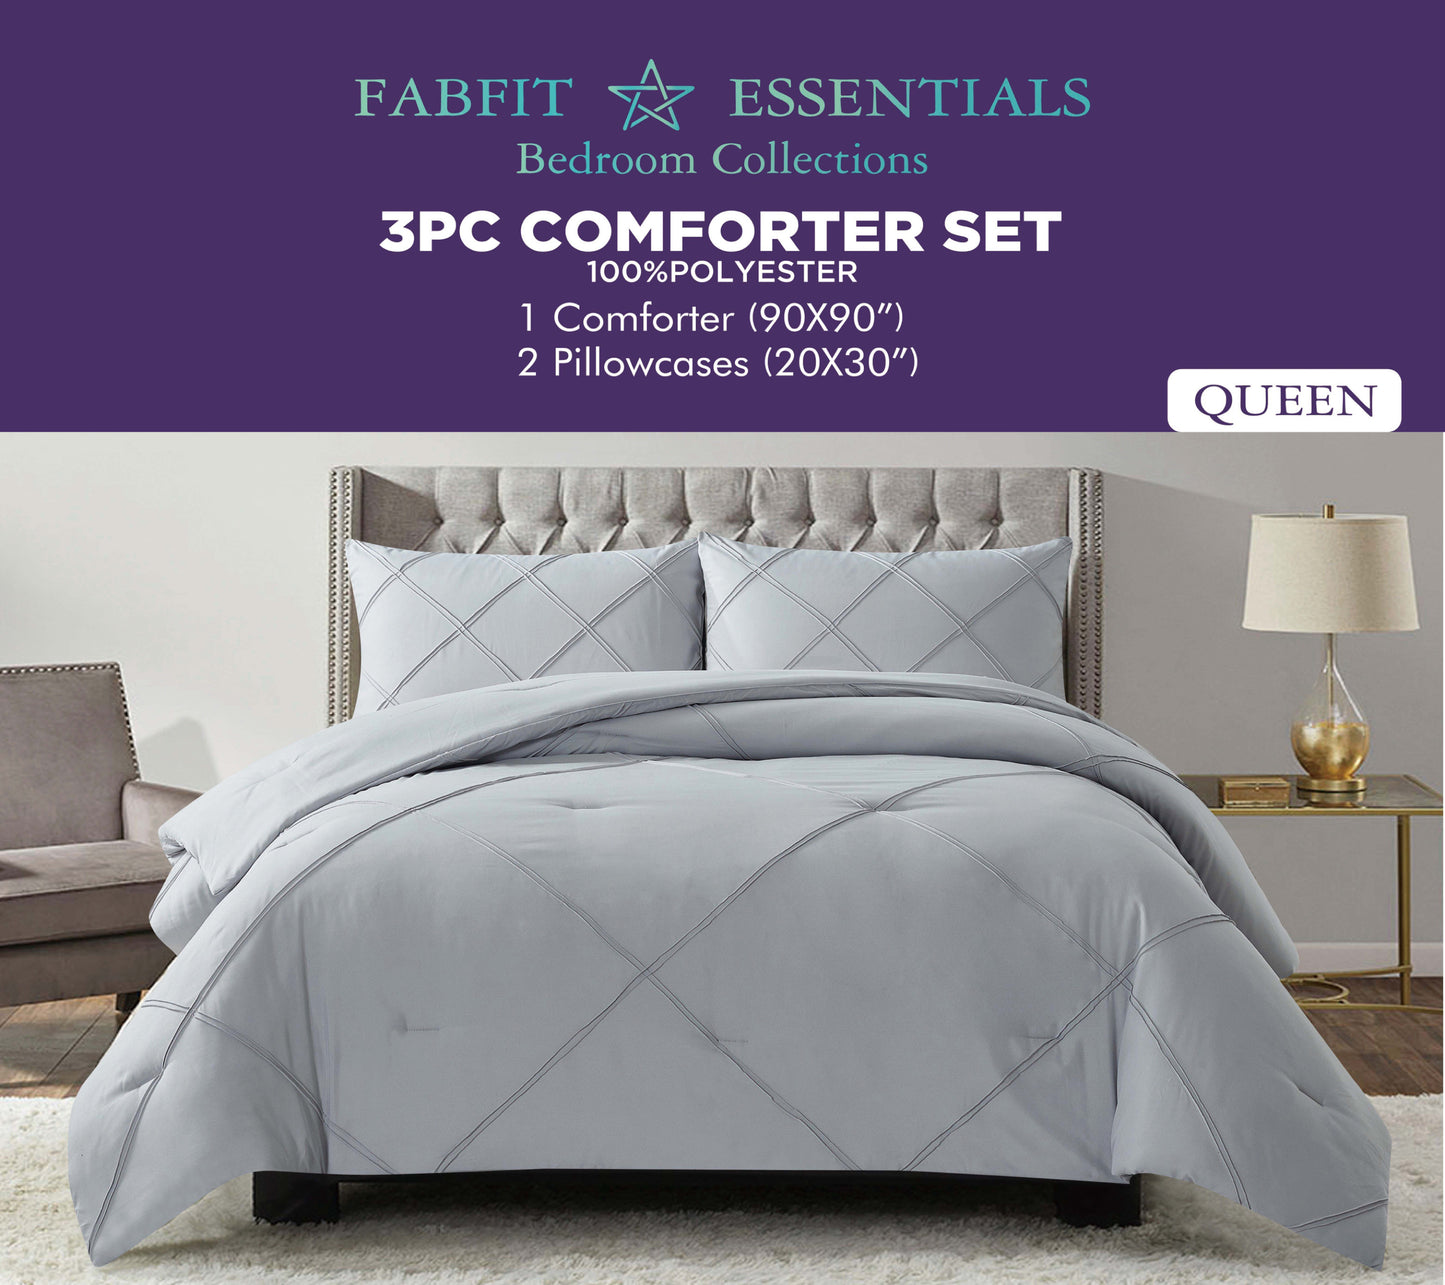 Gray 3 Pieces Soft All Season Luxury Solid Color Microfiber Comforter Set.